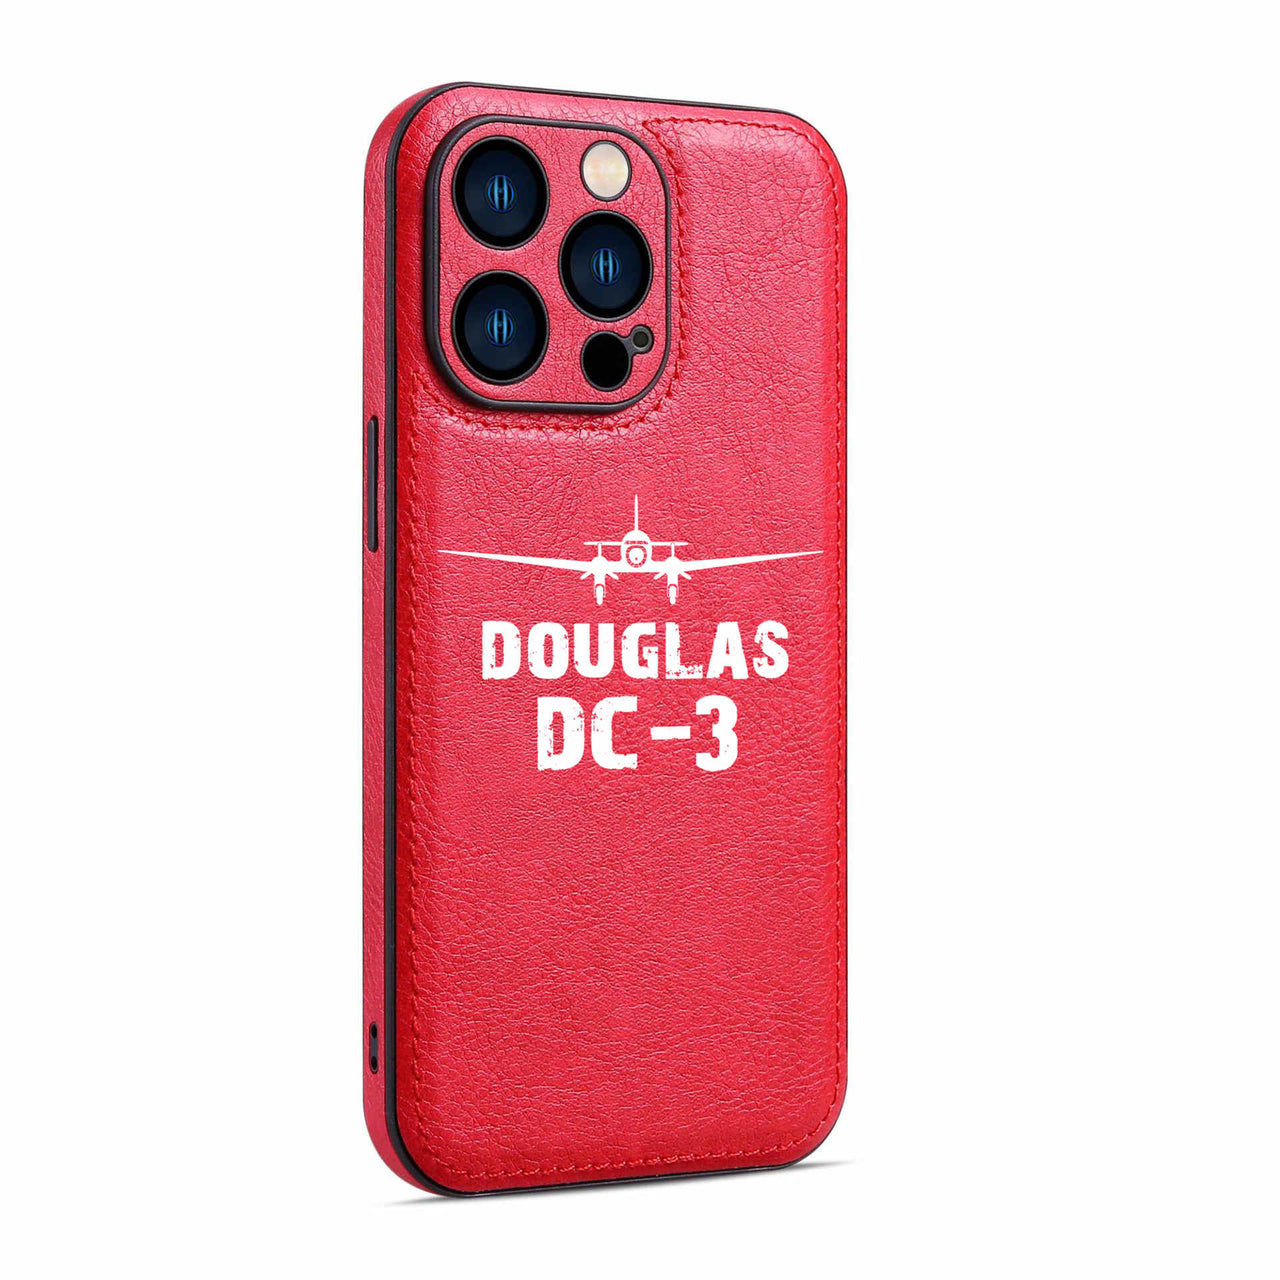 Douglas DC-3 & Plane Designed Leather iPhone Cases